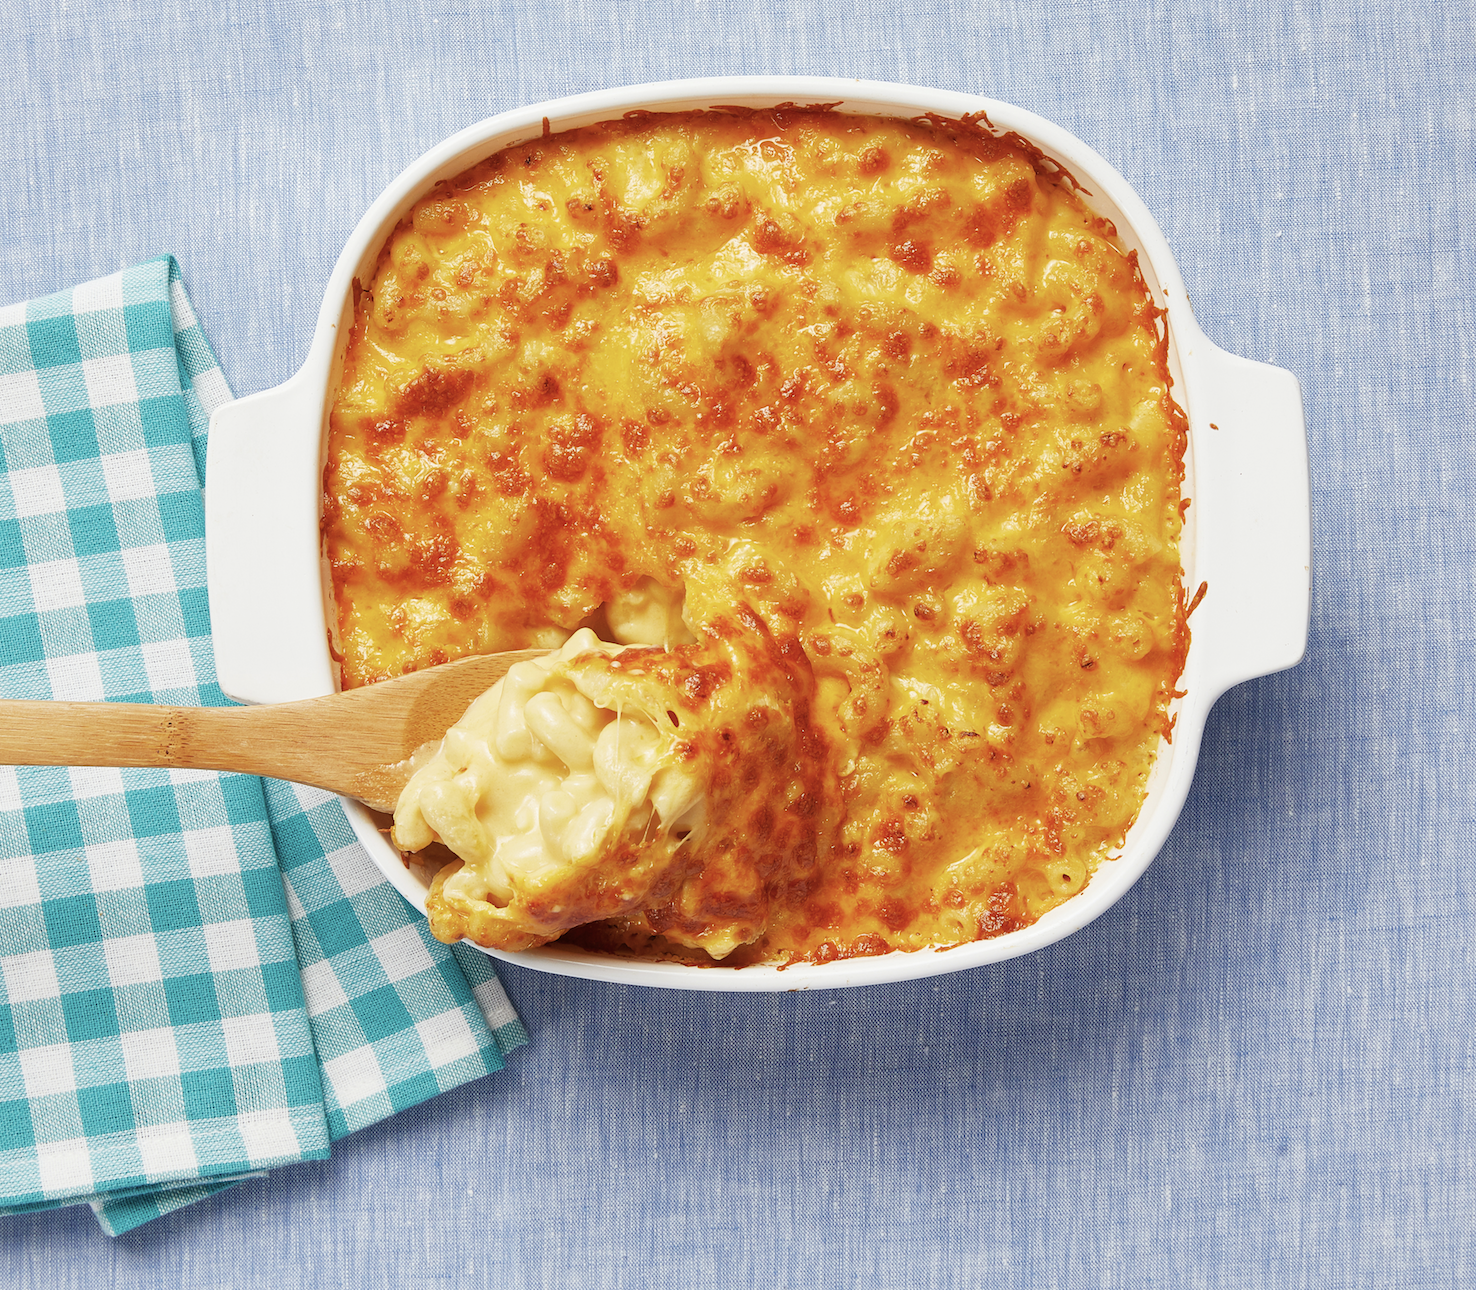 Best Macaroni and Cheese Recipe - How to Make Homemade Mac and Cheese